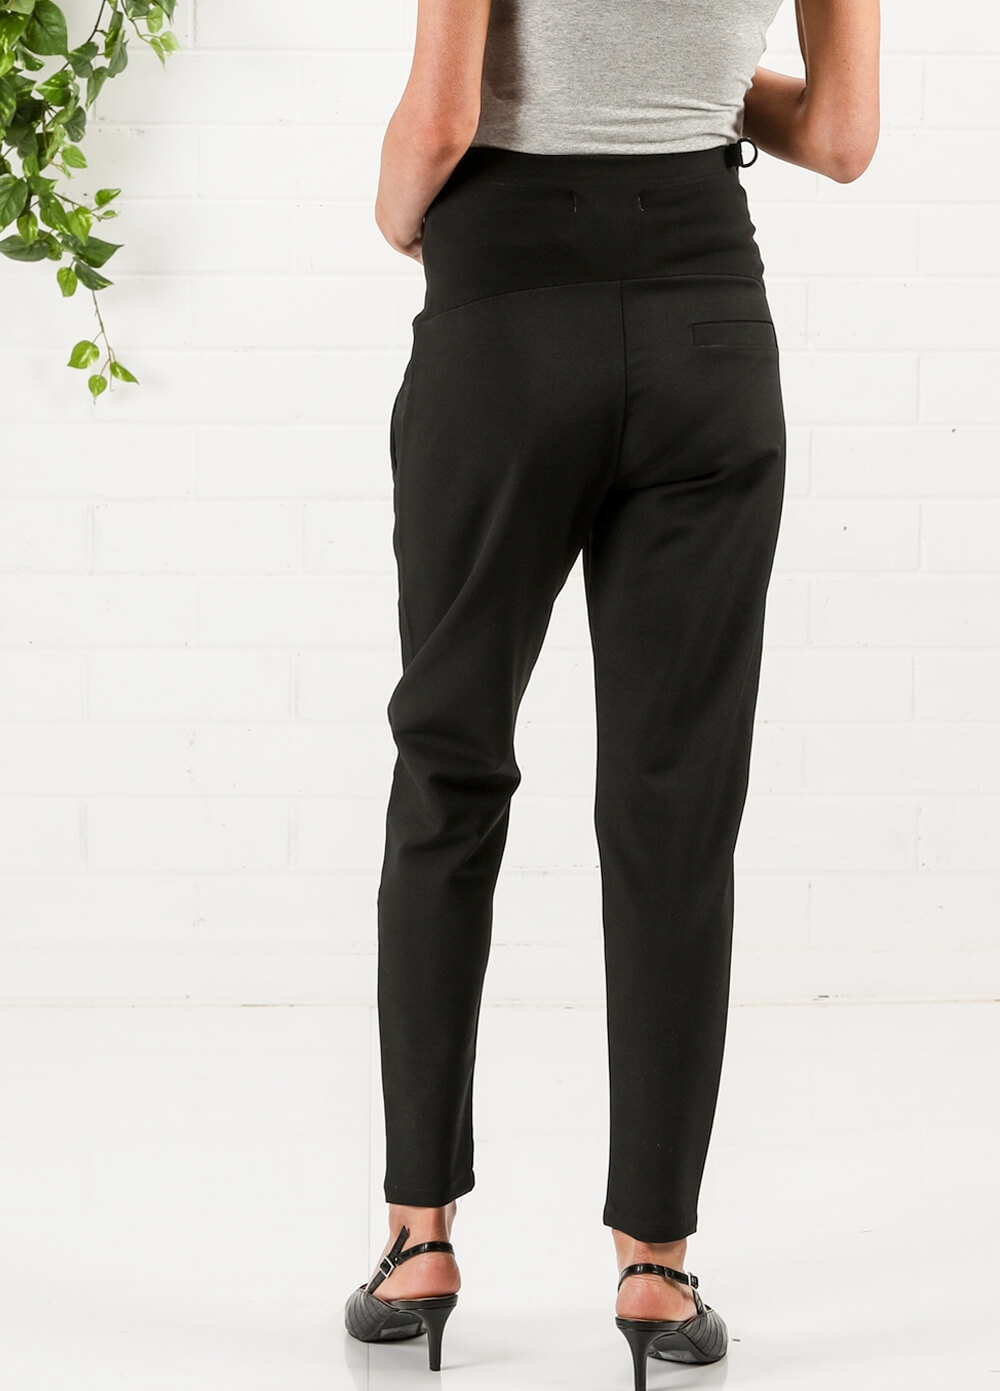 Lait & Co - London Bengalin Business Trousers - Black | Queen Bee